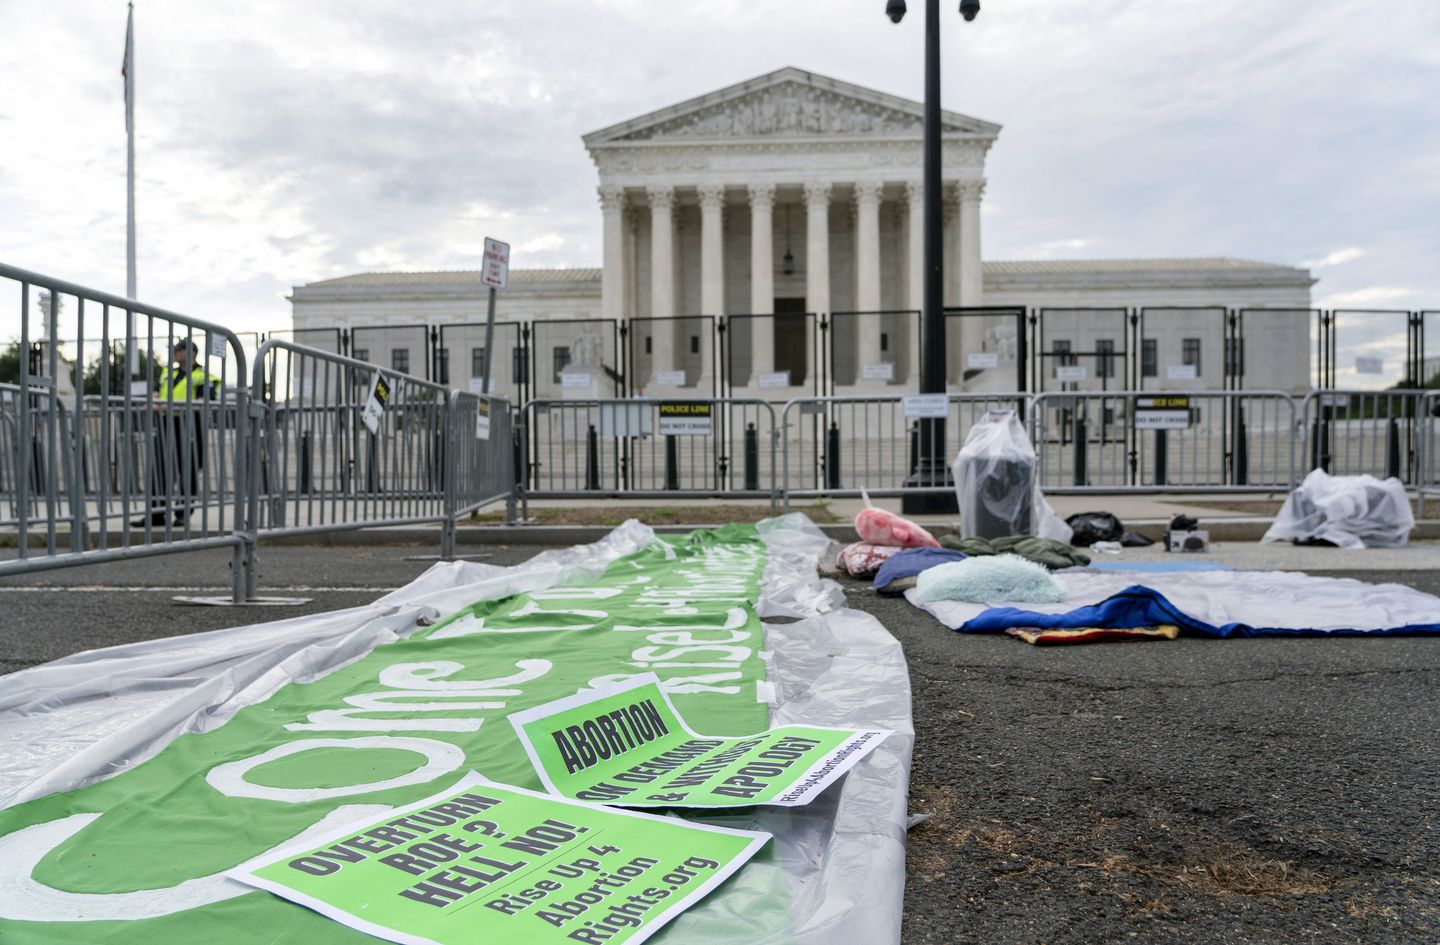 AS bersiap menghadapi kekerasan terhadap kaum konservatif, kelompok pro-kehidupan dengan keputusan aborsi Mahkamah Agung